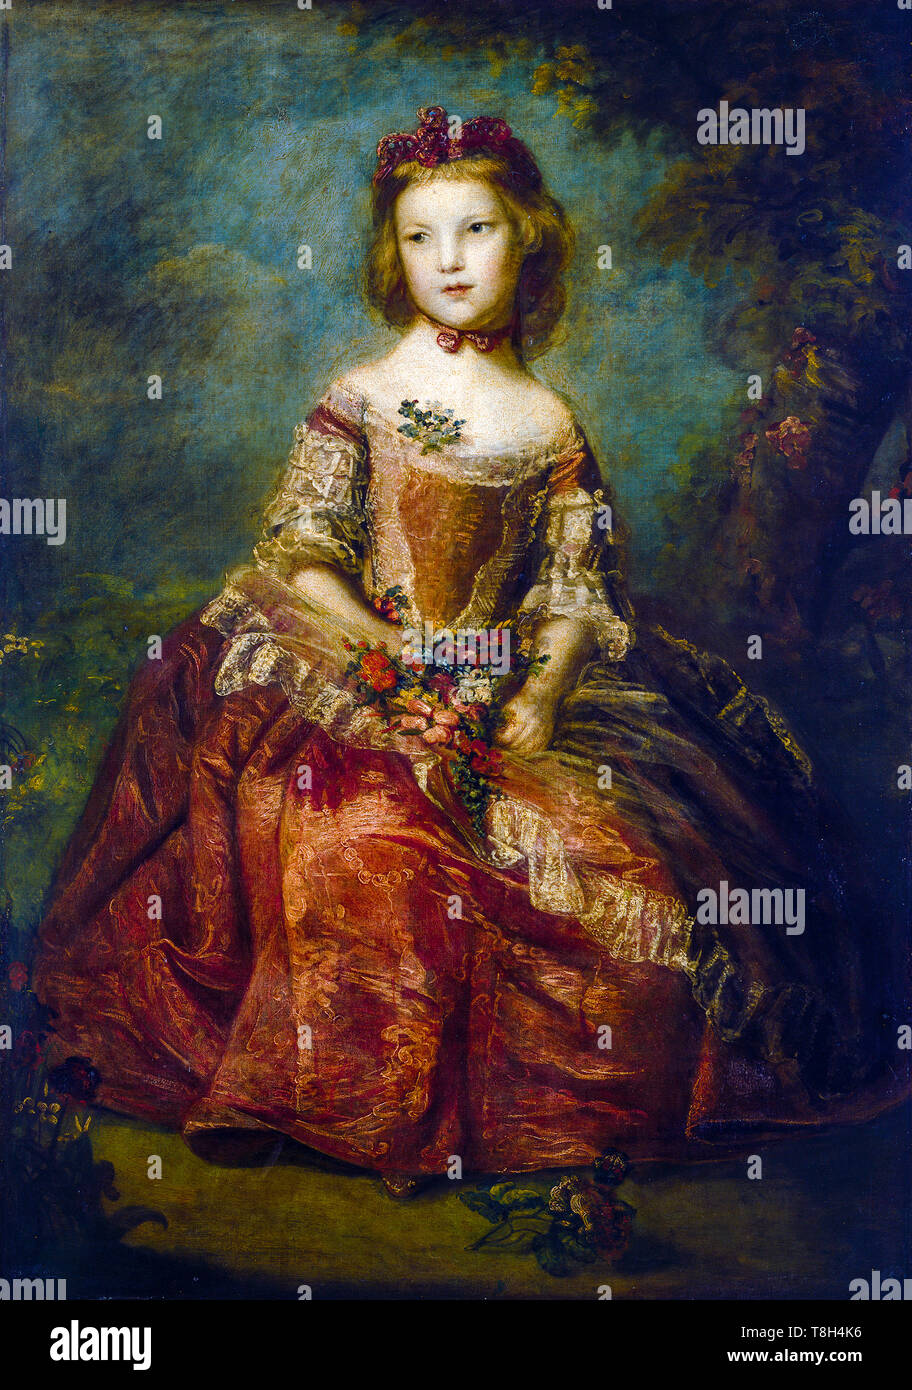 Sir Joshua Reynolds, Lady Elizabeth Hamilton, portrait painting as a young girl, 1758 Stock Photo